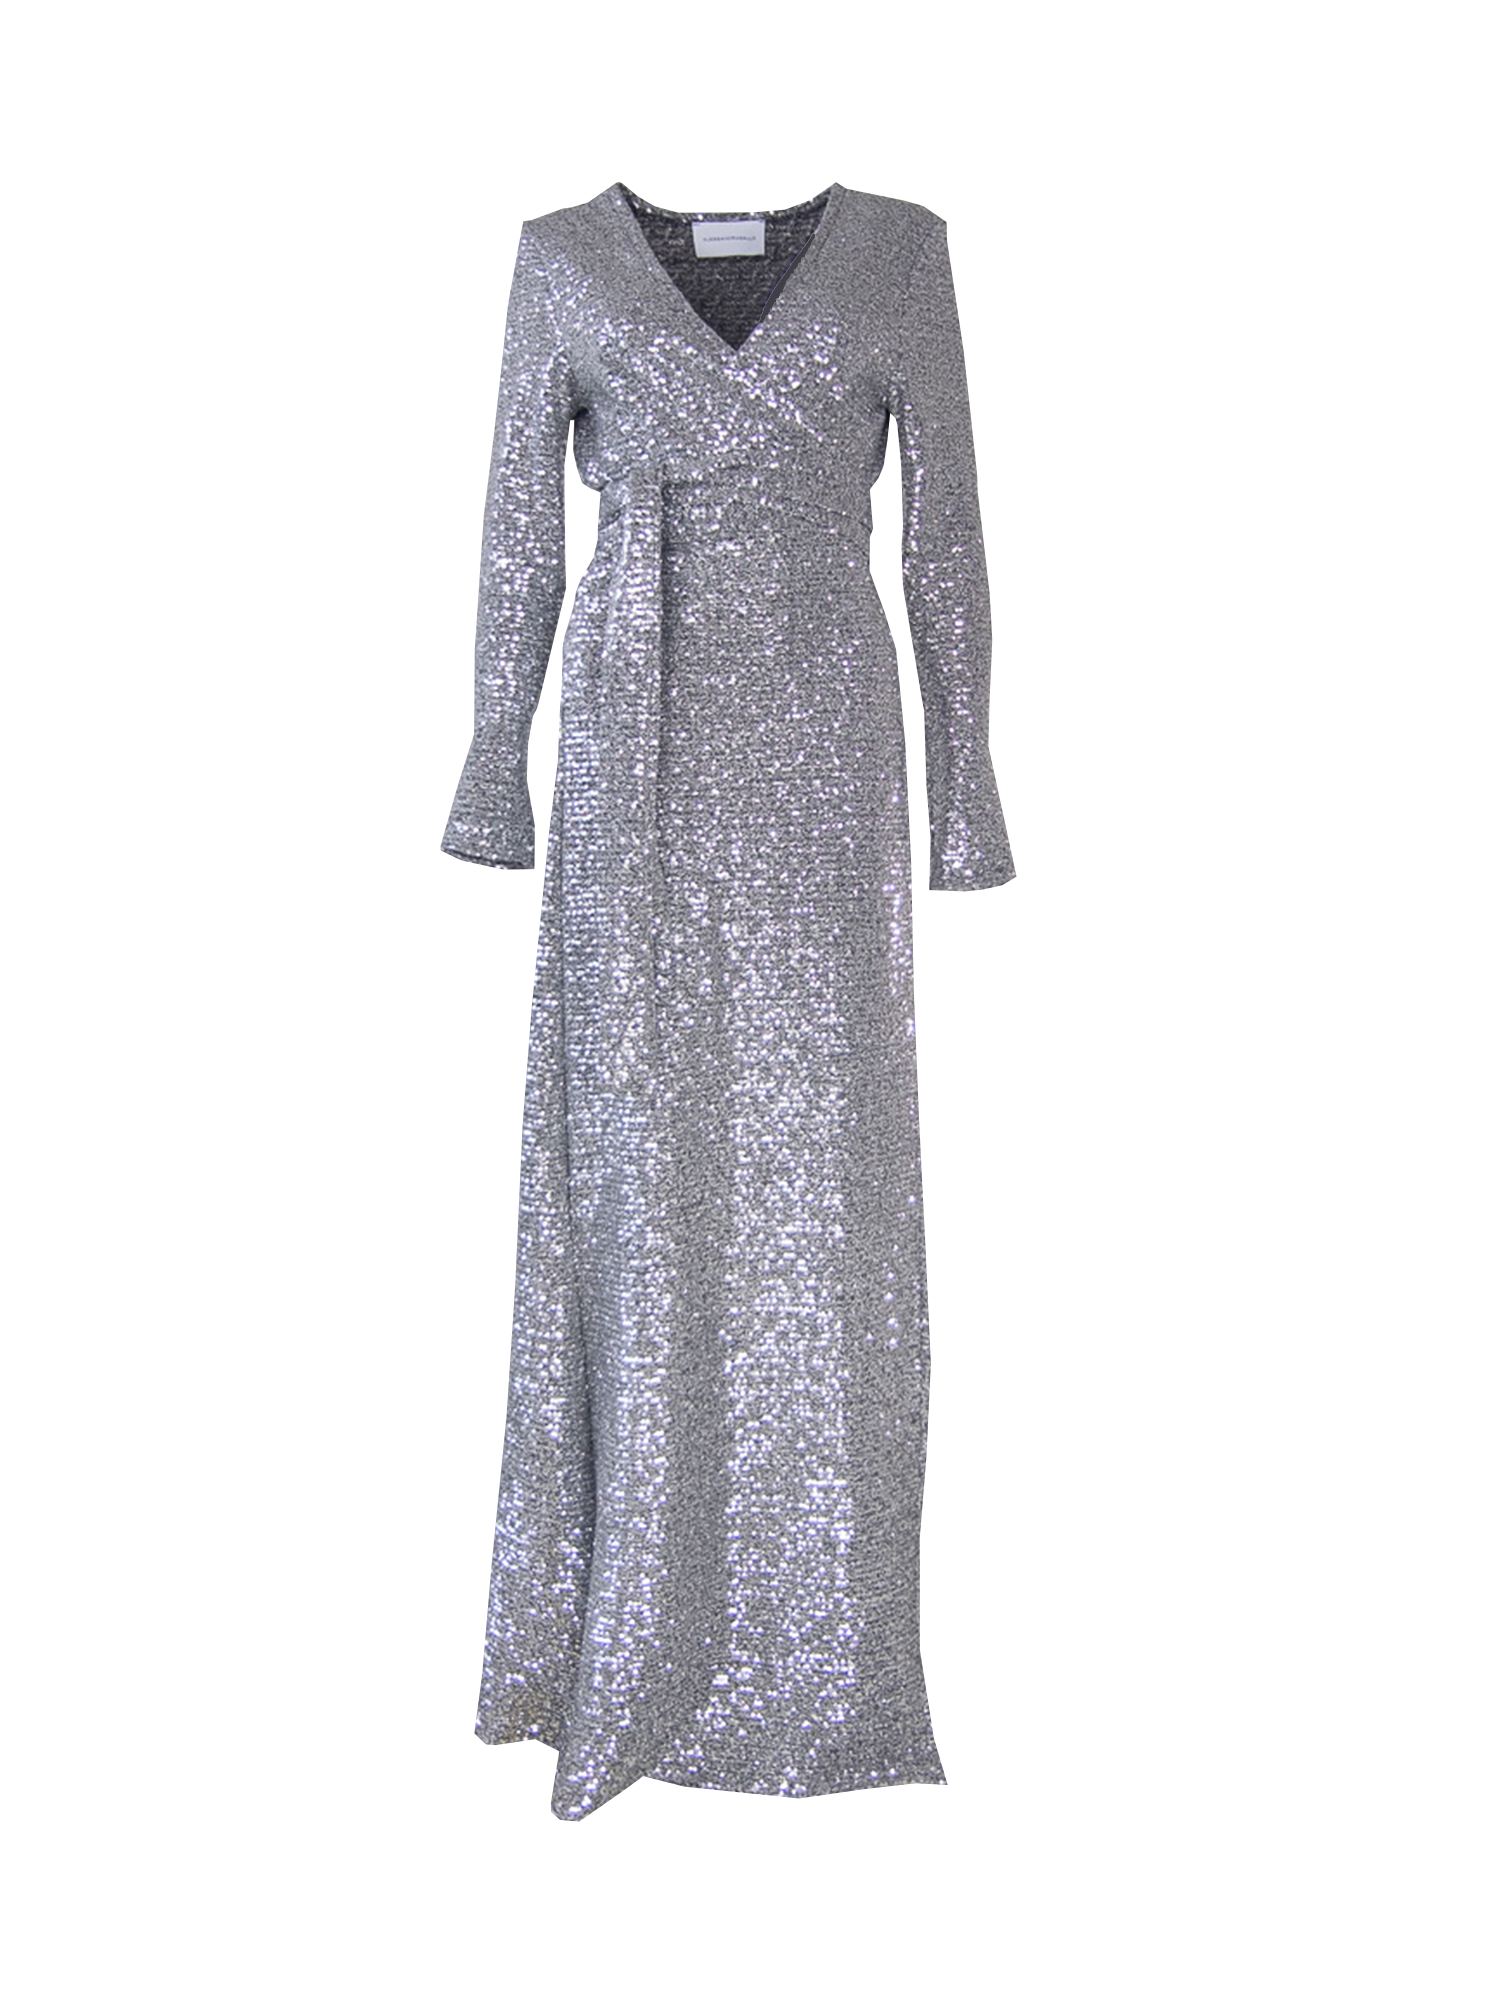 LETIZIA - long dress in silver pailettes